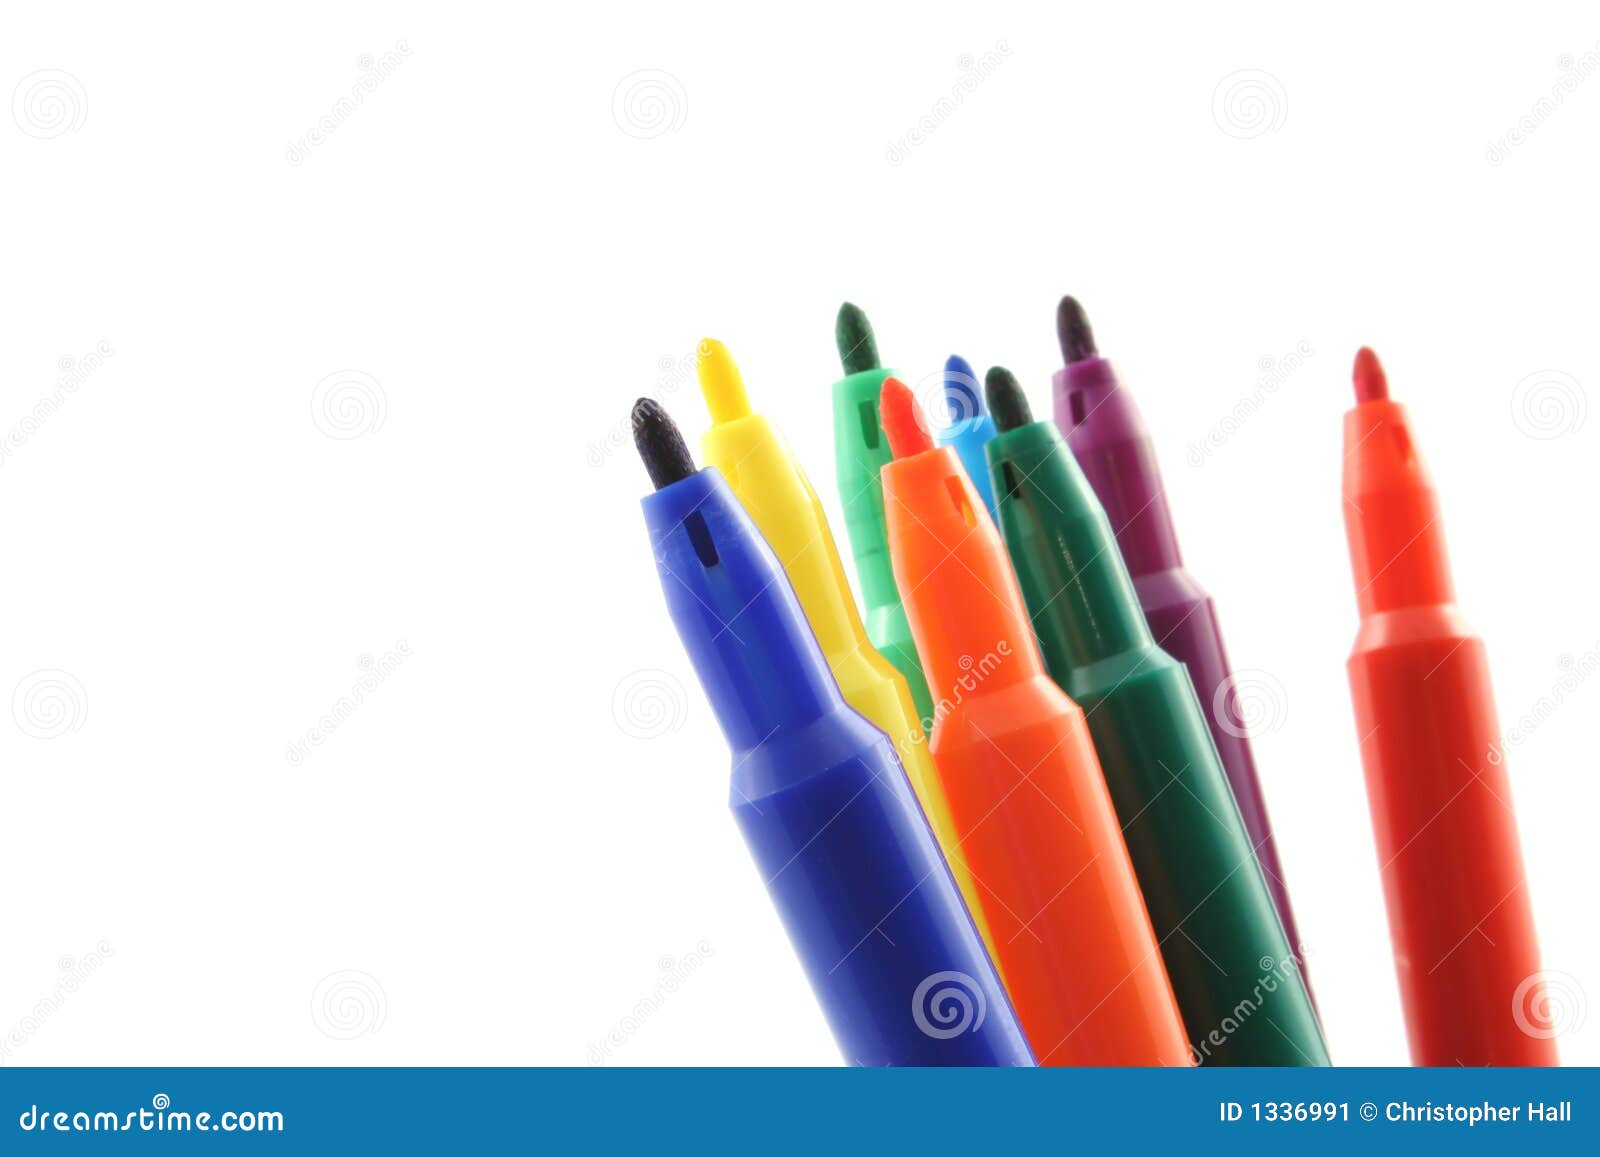 https://thumbs.dreamstime.com/z/coloured-pens-1336991.jpg